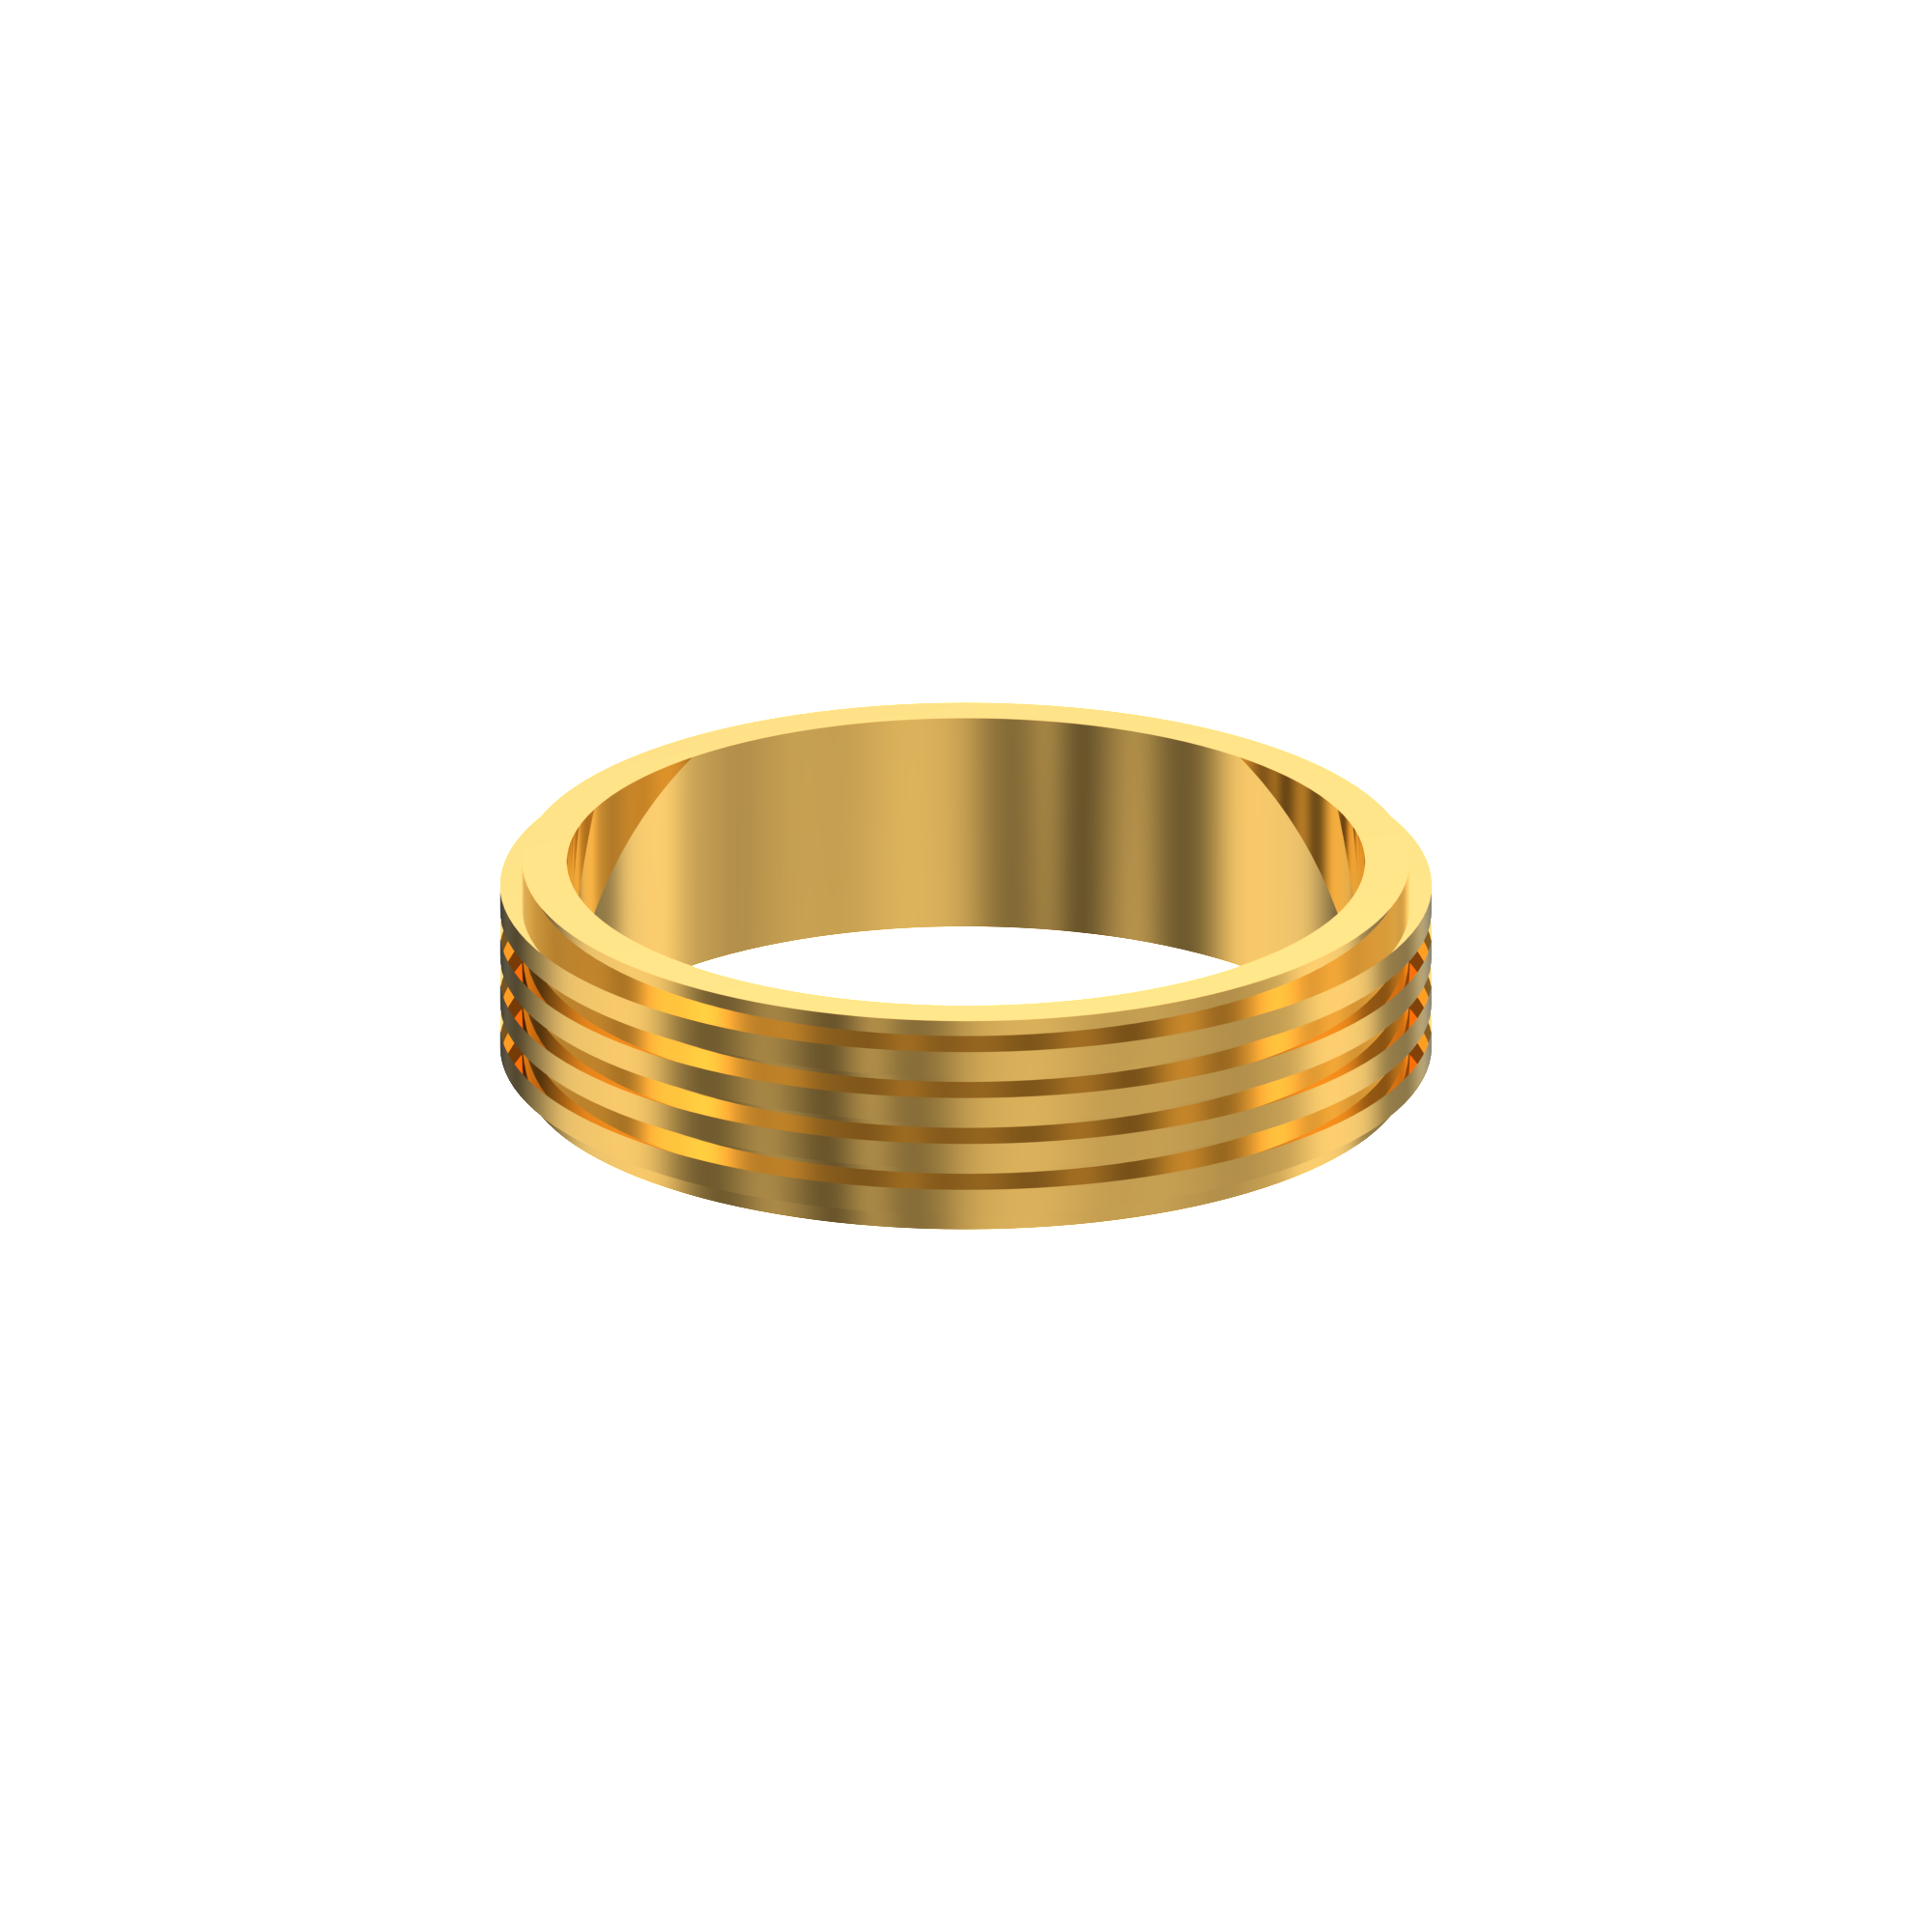 Circular-Design-Gold-Ring